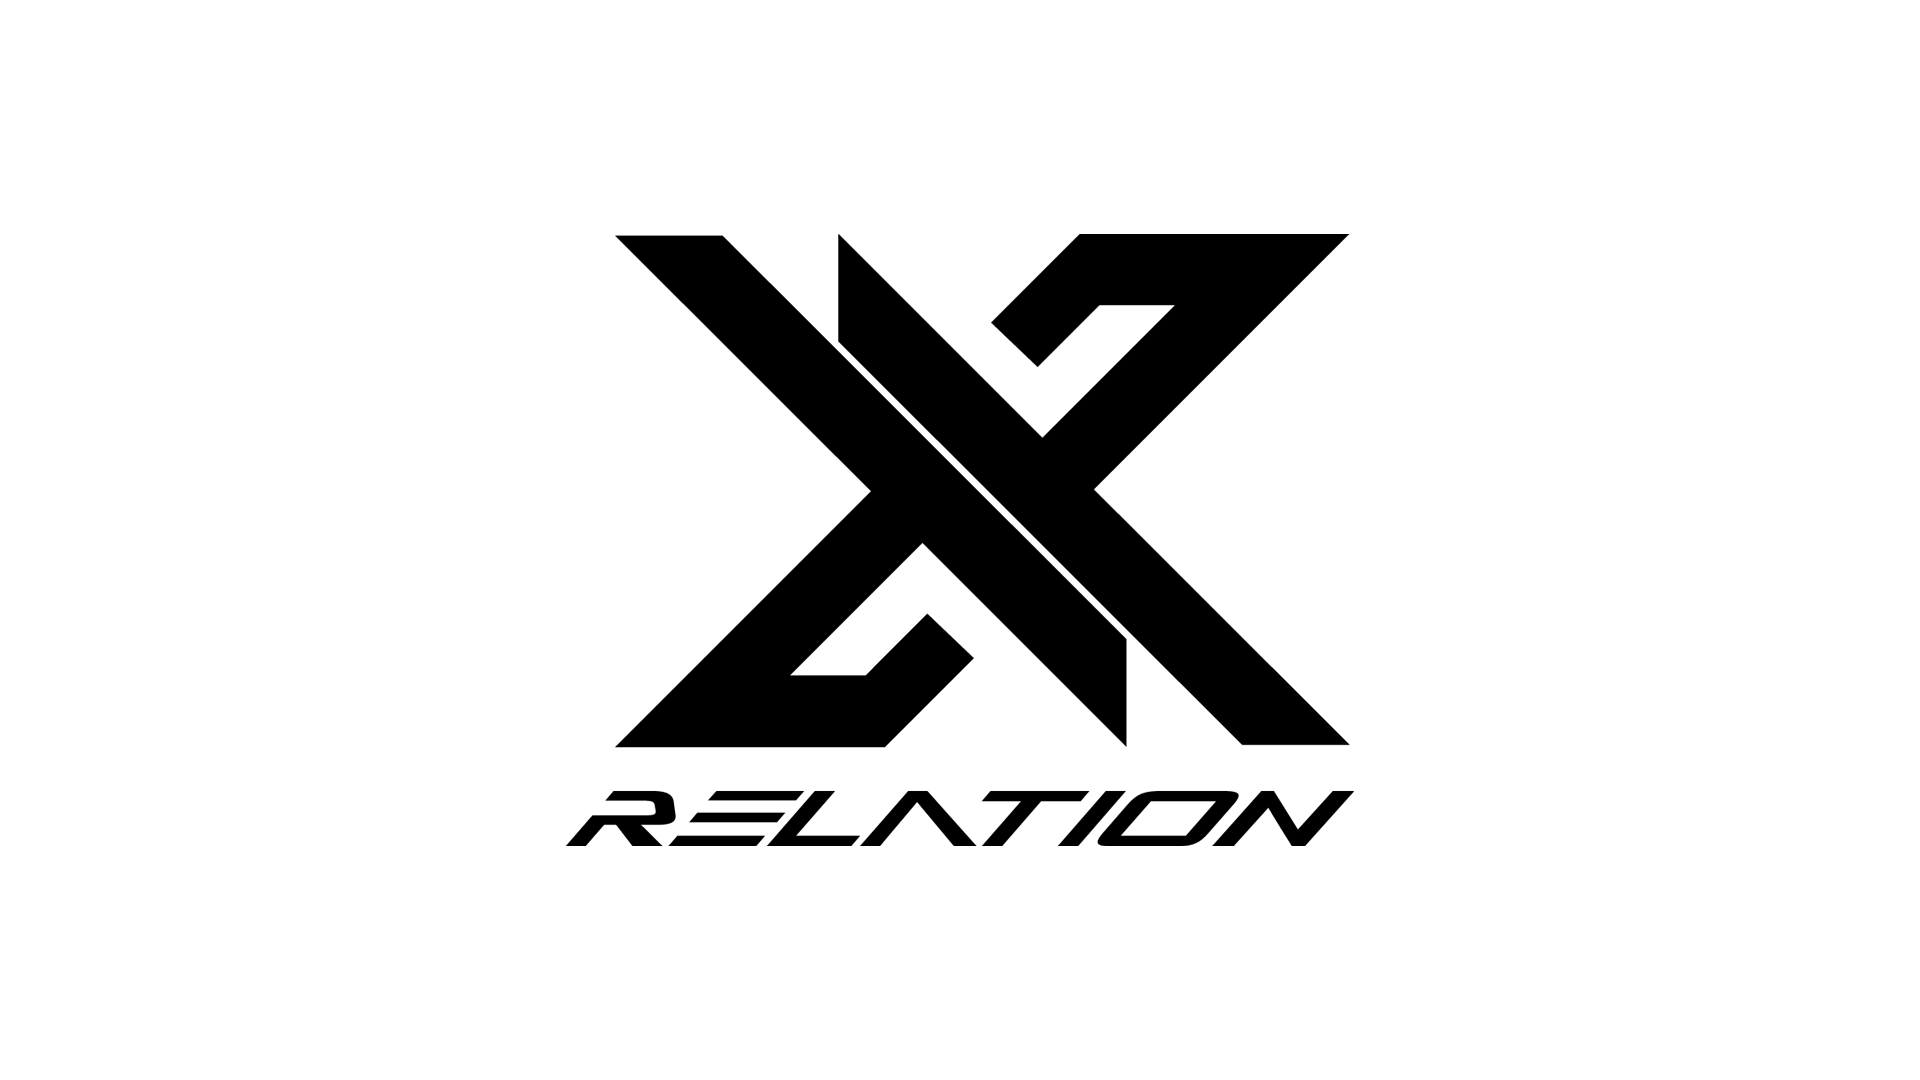 Pubg系youtuber 実況者まがれつ2nd が中心となって Eスポーツ事務所設立 株式会社 Relation Xのプレスリリース